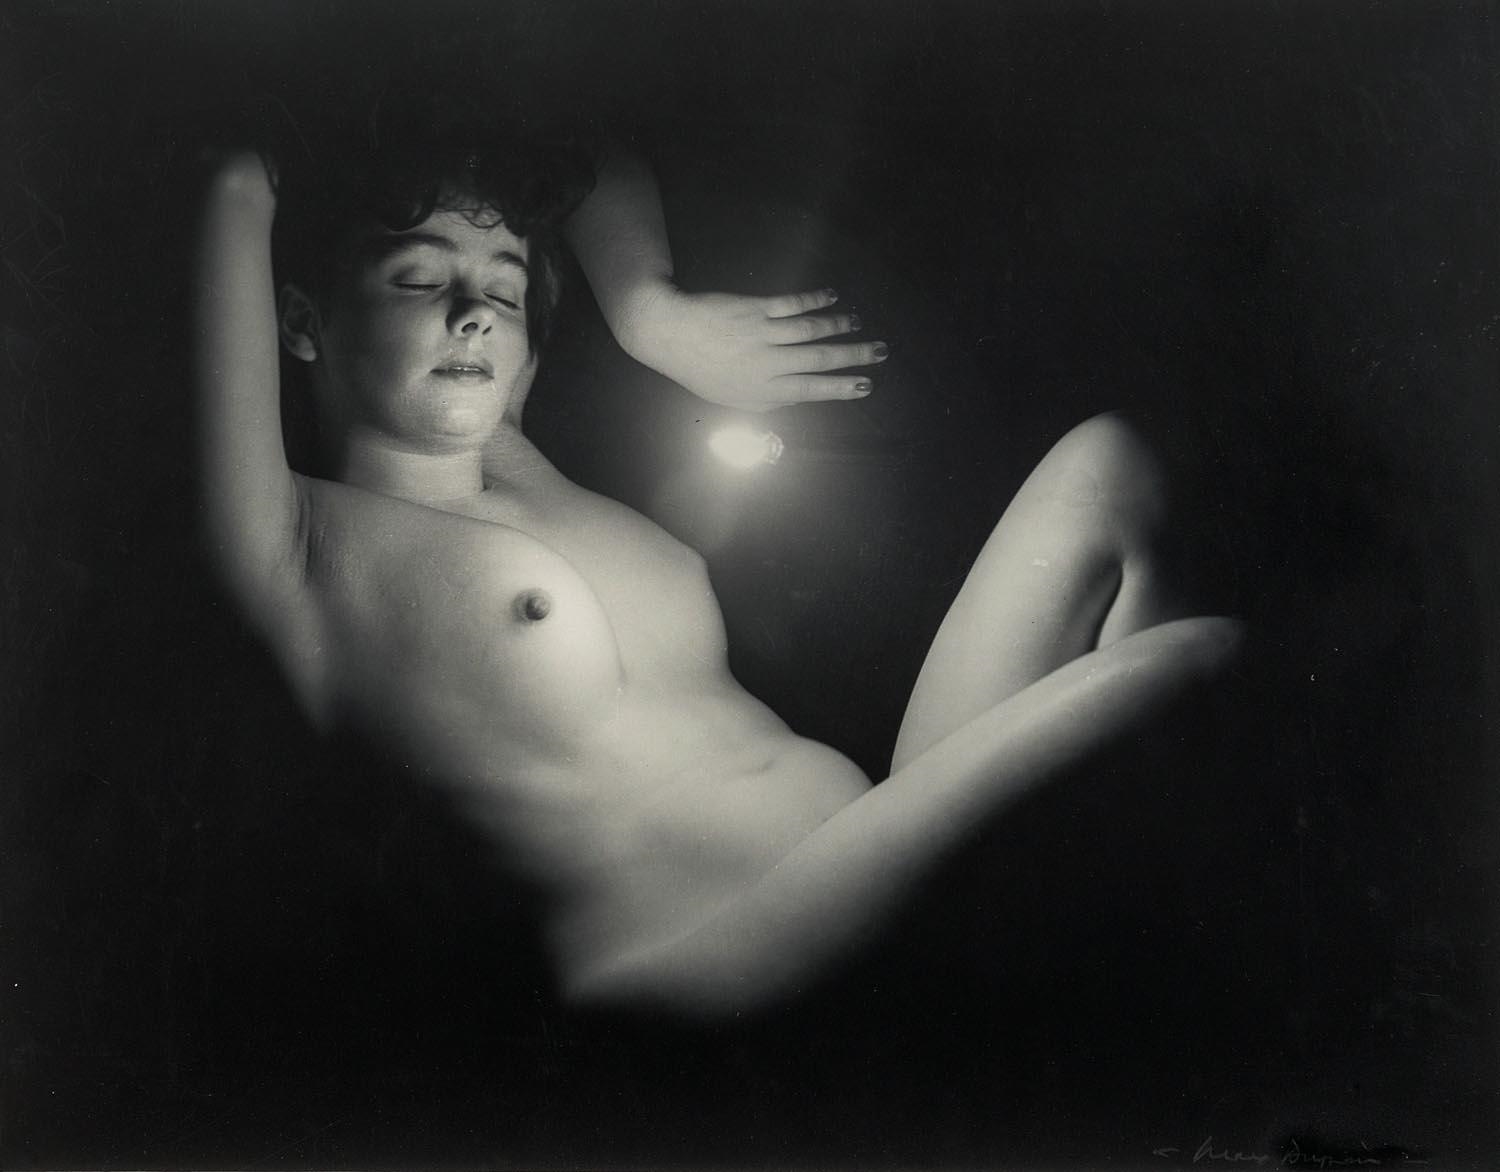 Artwork by Max Dupain, Illuminated Nude II, Made of silver gelatin photogra...